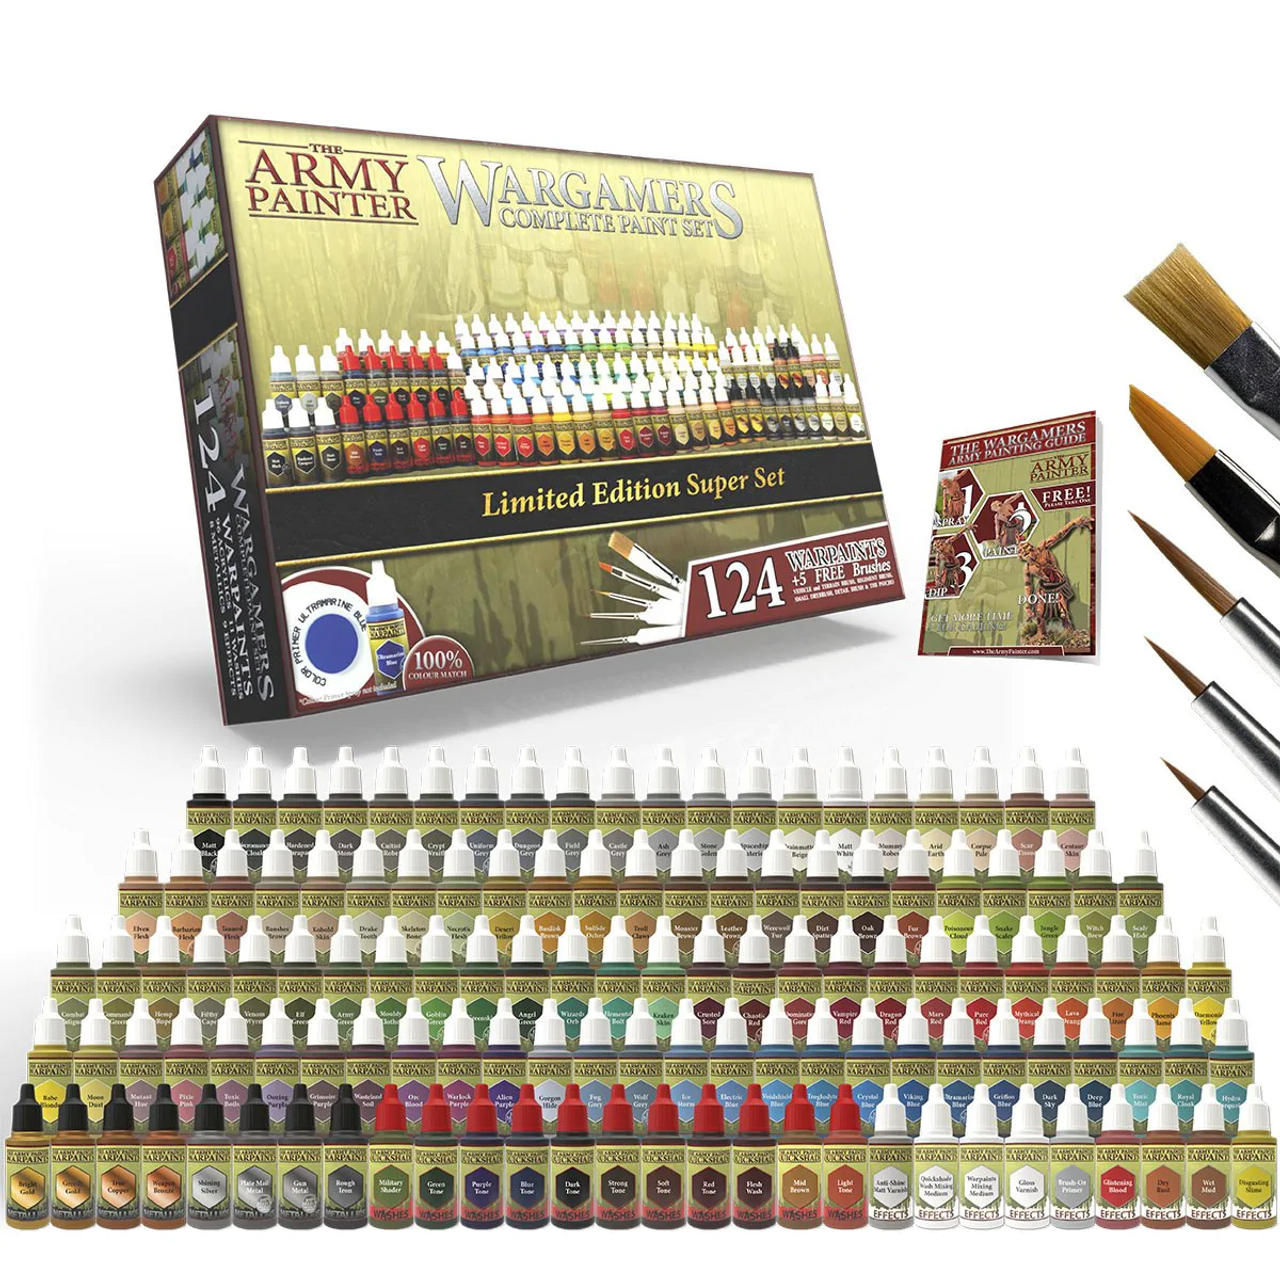  The Army Painter, Mega Paint Set 50, Miniature Painting Kit  with Wargamer Regiment Miniatures Paint Brush, Miniature Paint Set for  Miniature Figures